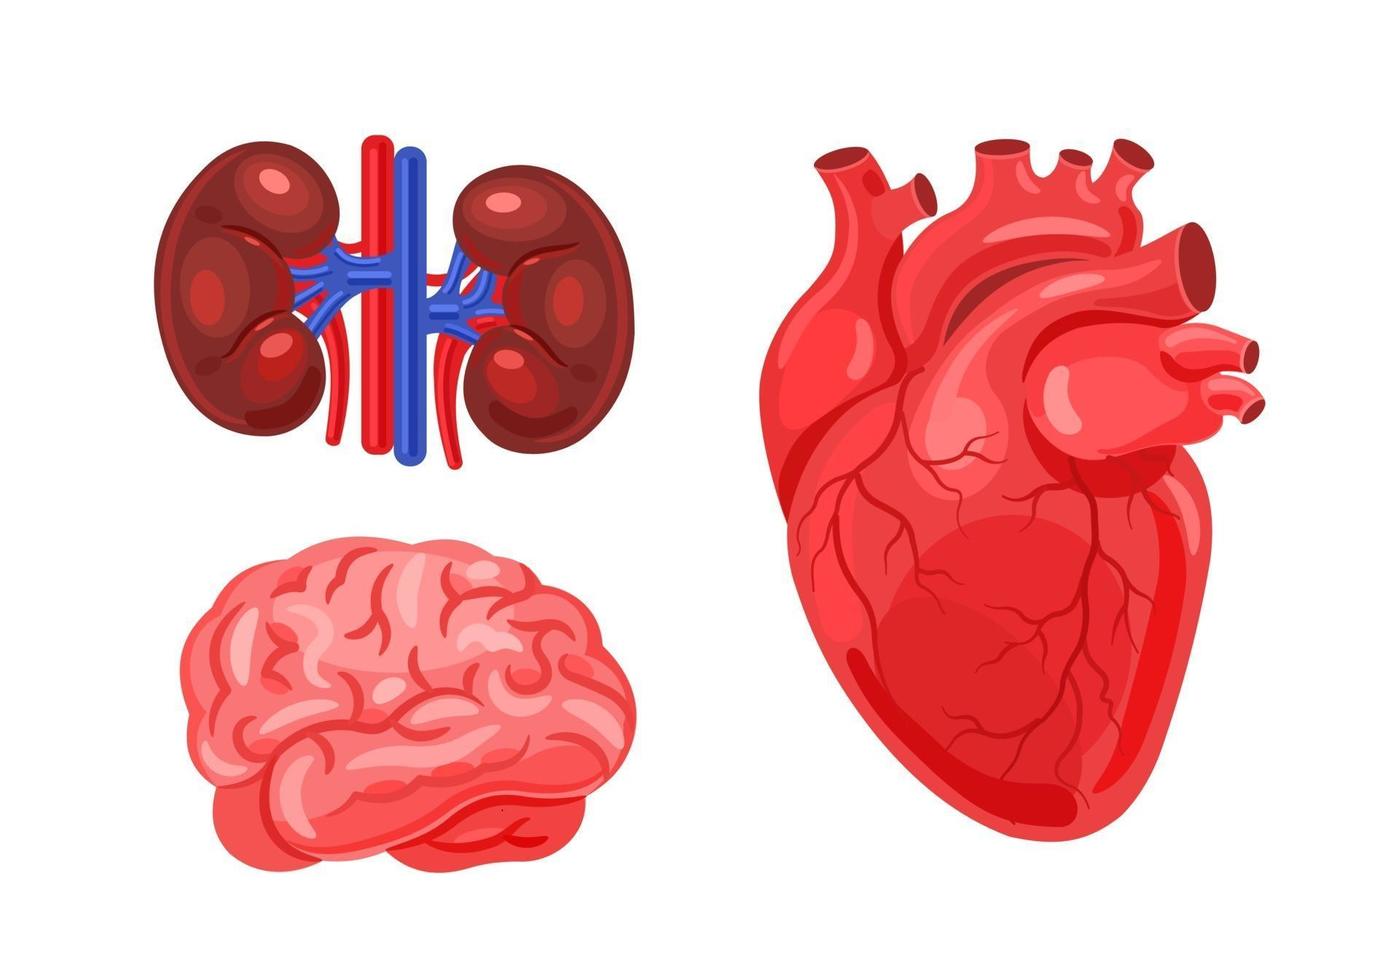 Human kidneys, brain, heart. Human organs set vector